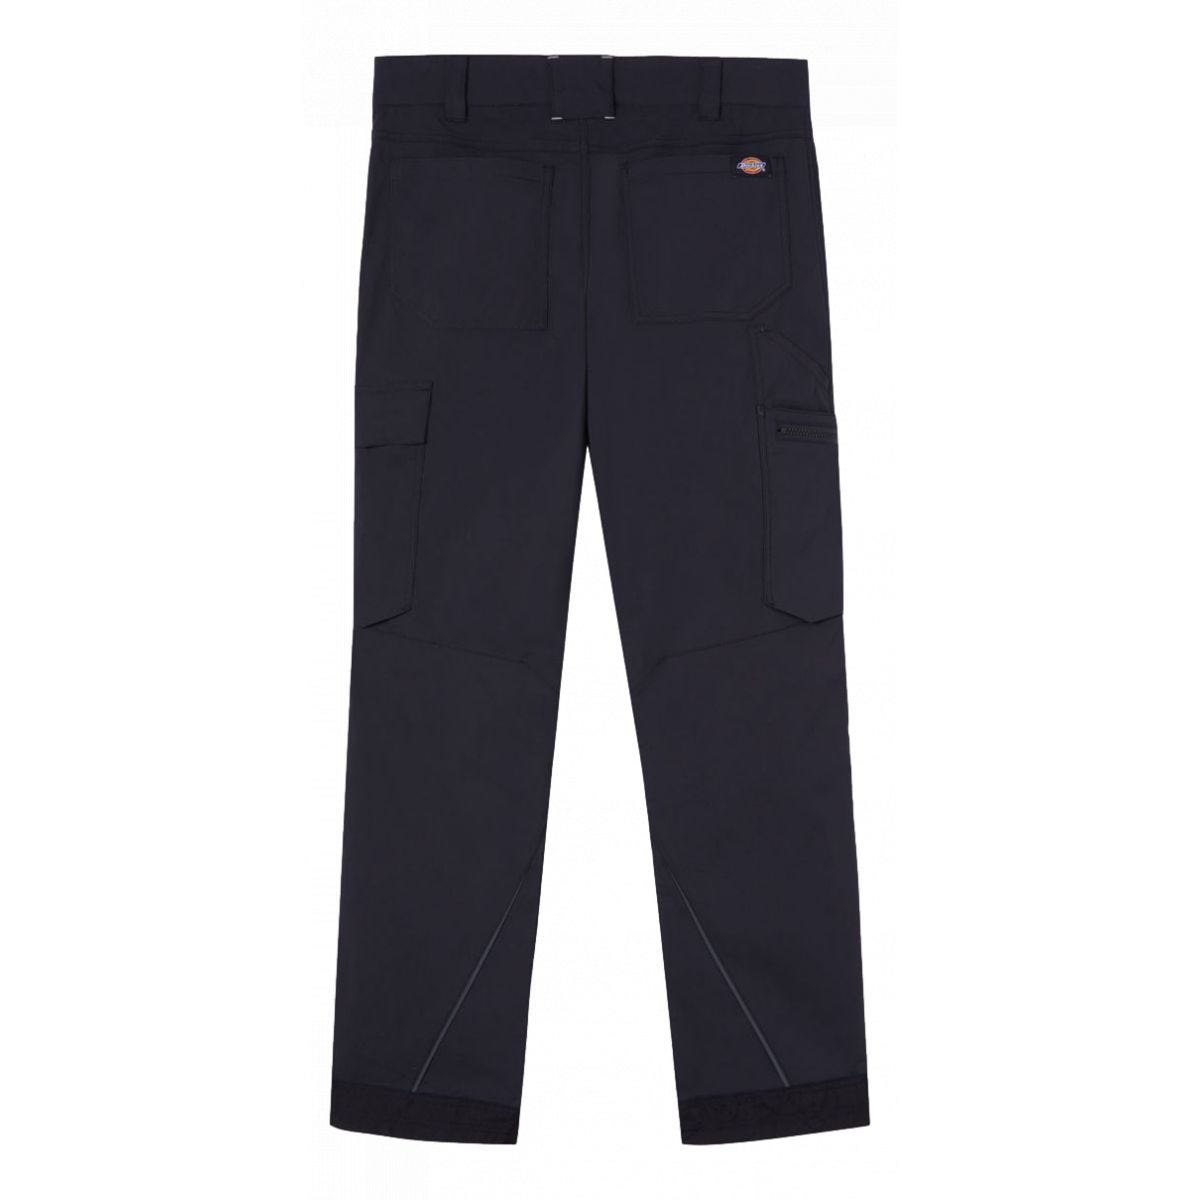 Pantalon léger Flex Noir - Dickies - Taille 46 1